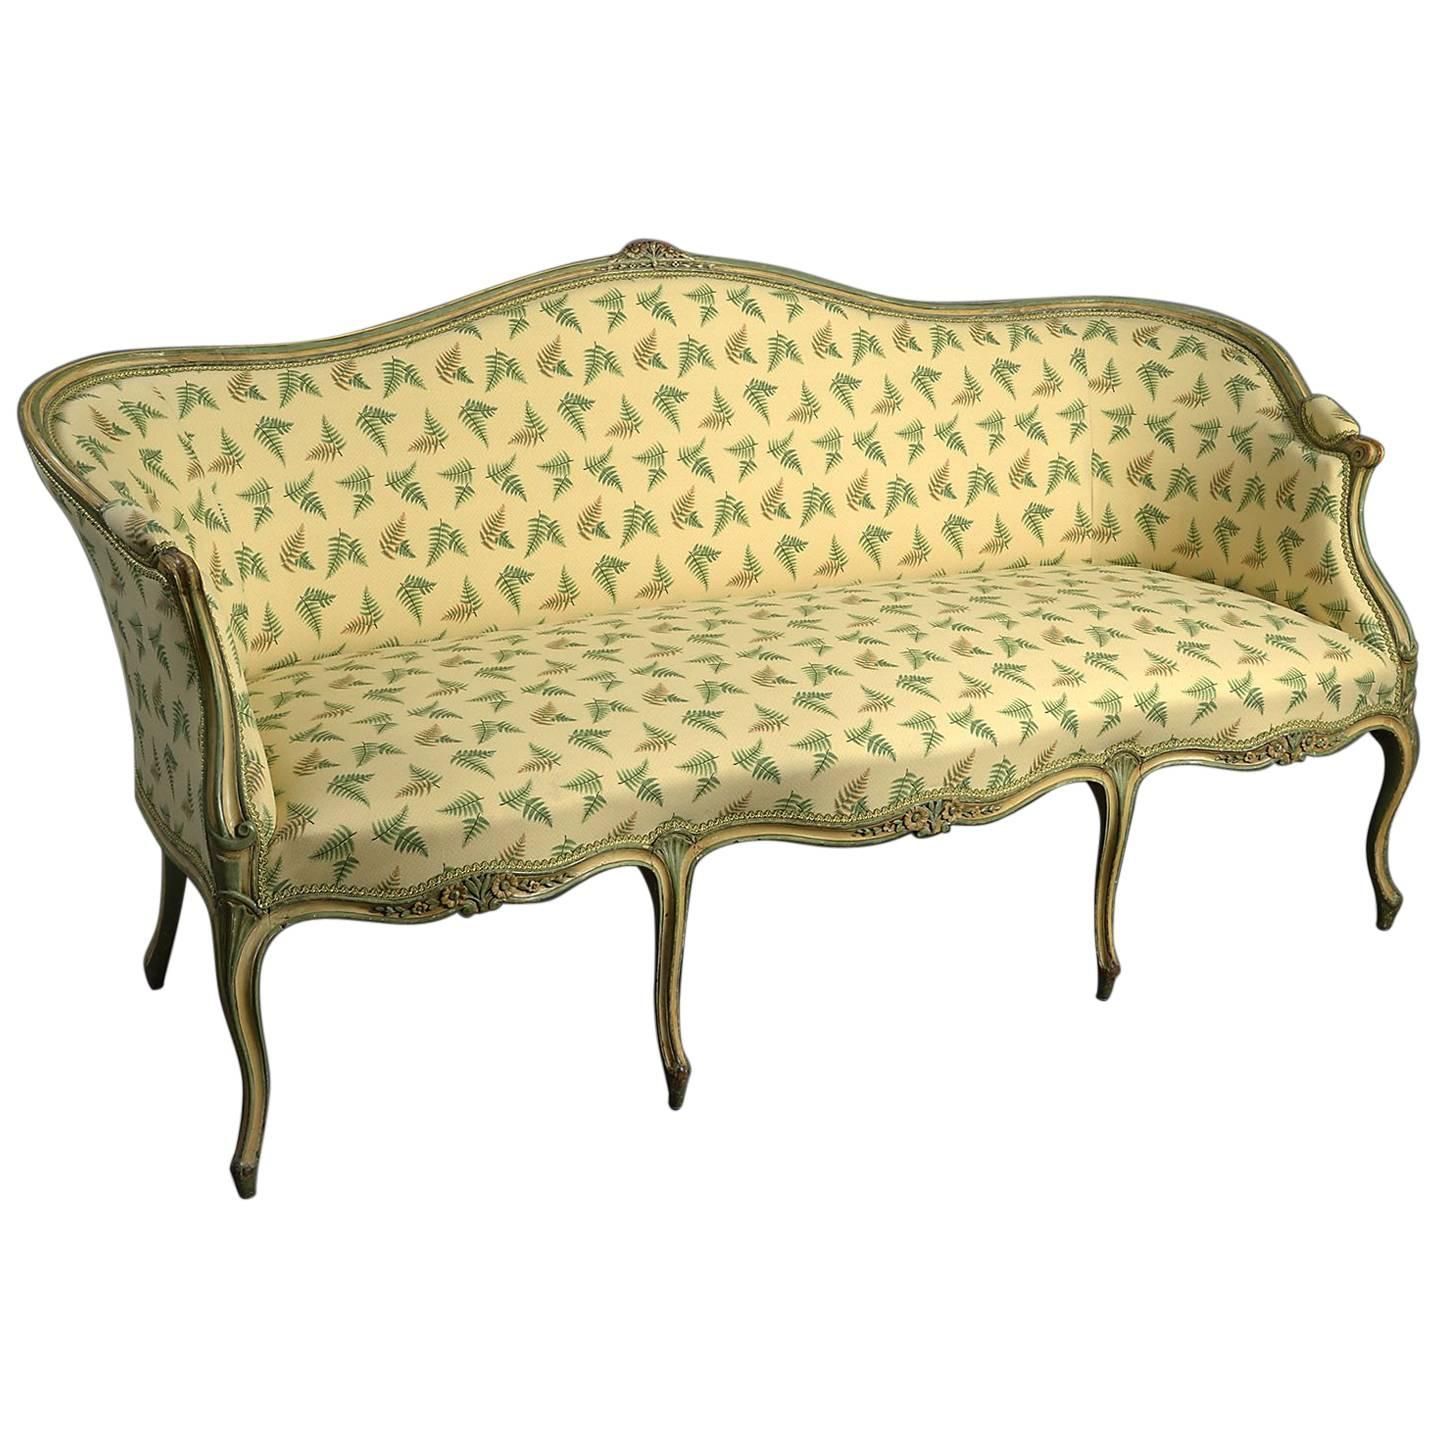 18th Century English George III Painted Sofa For Sale